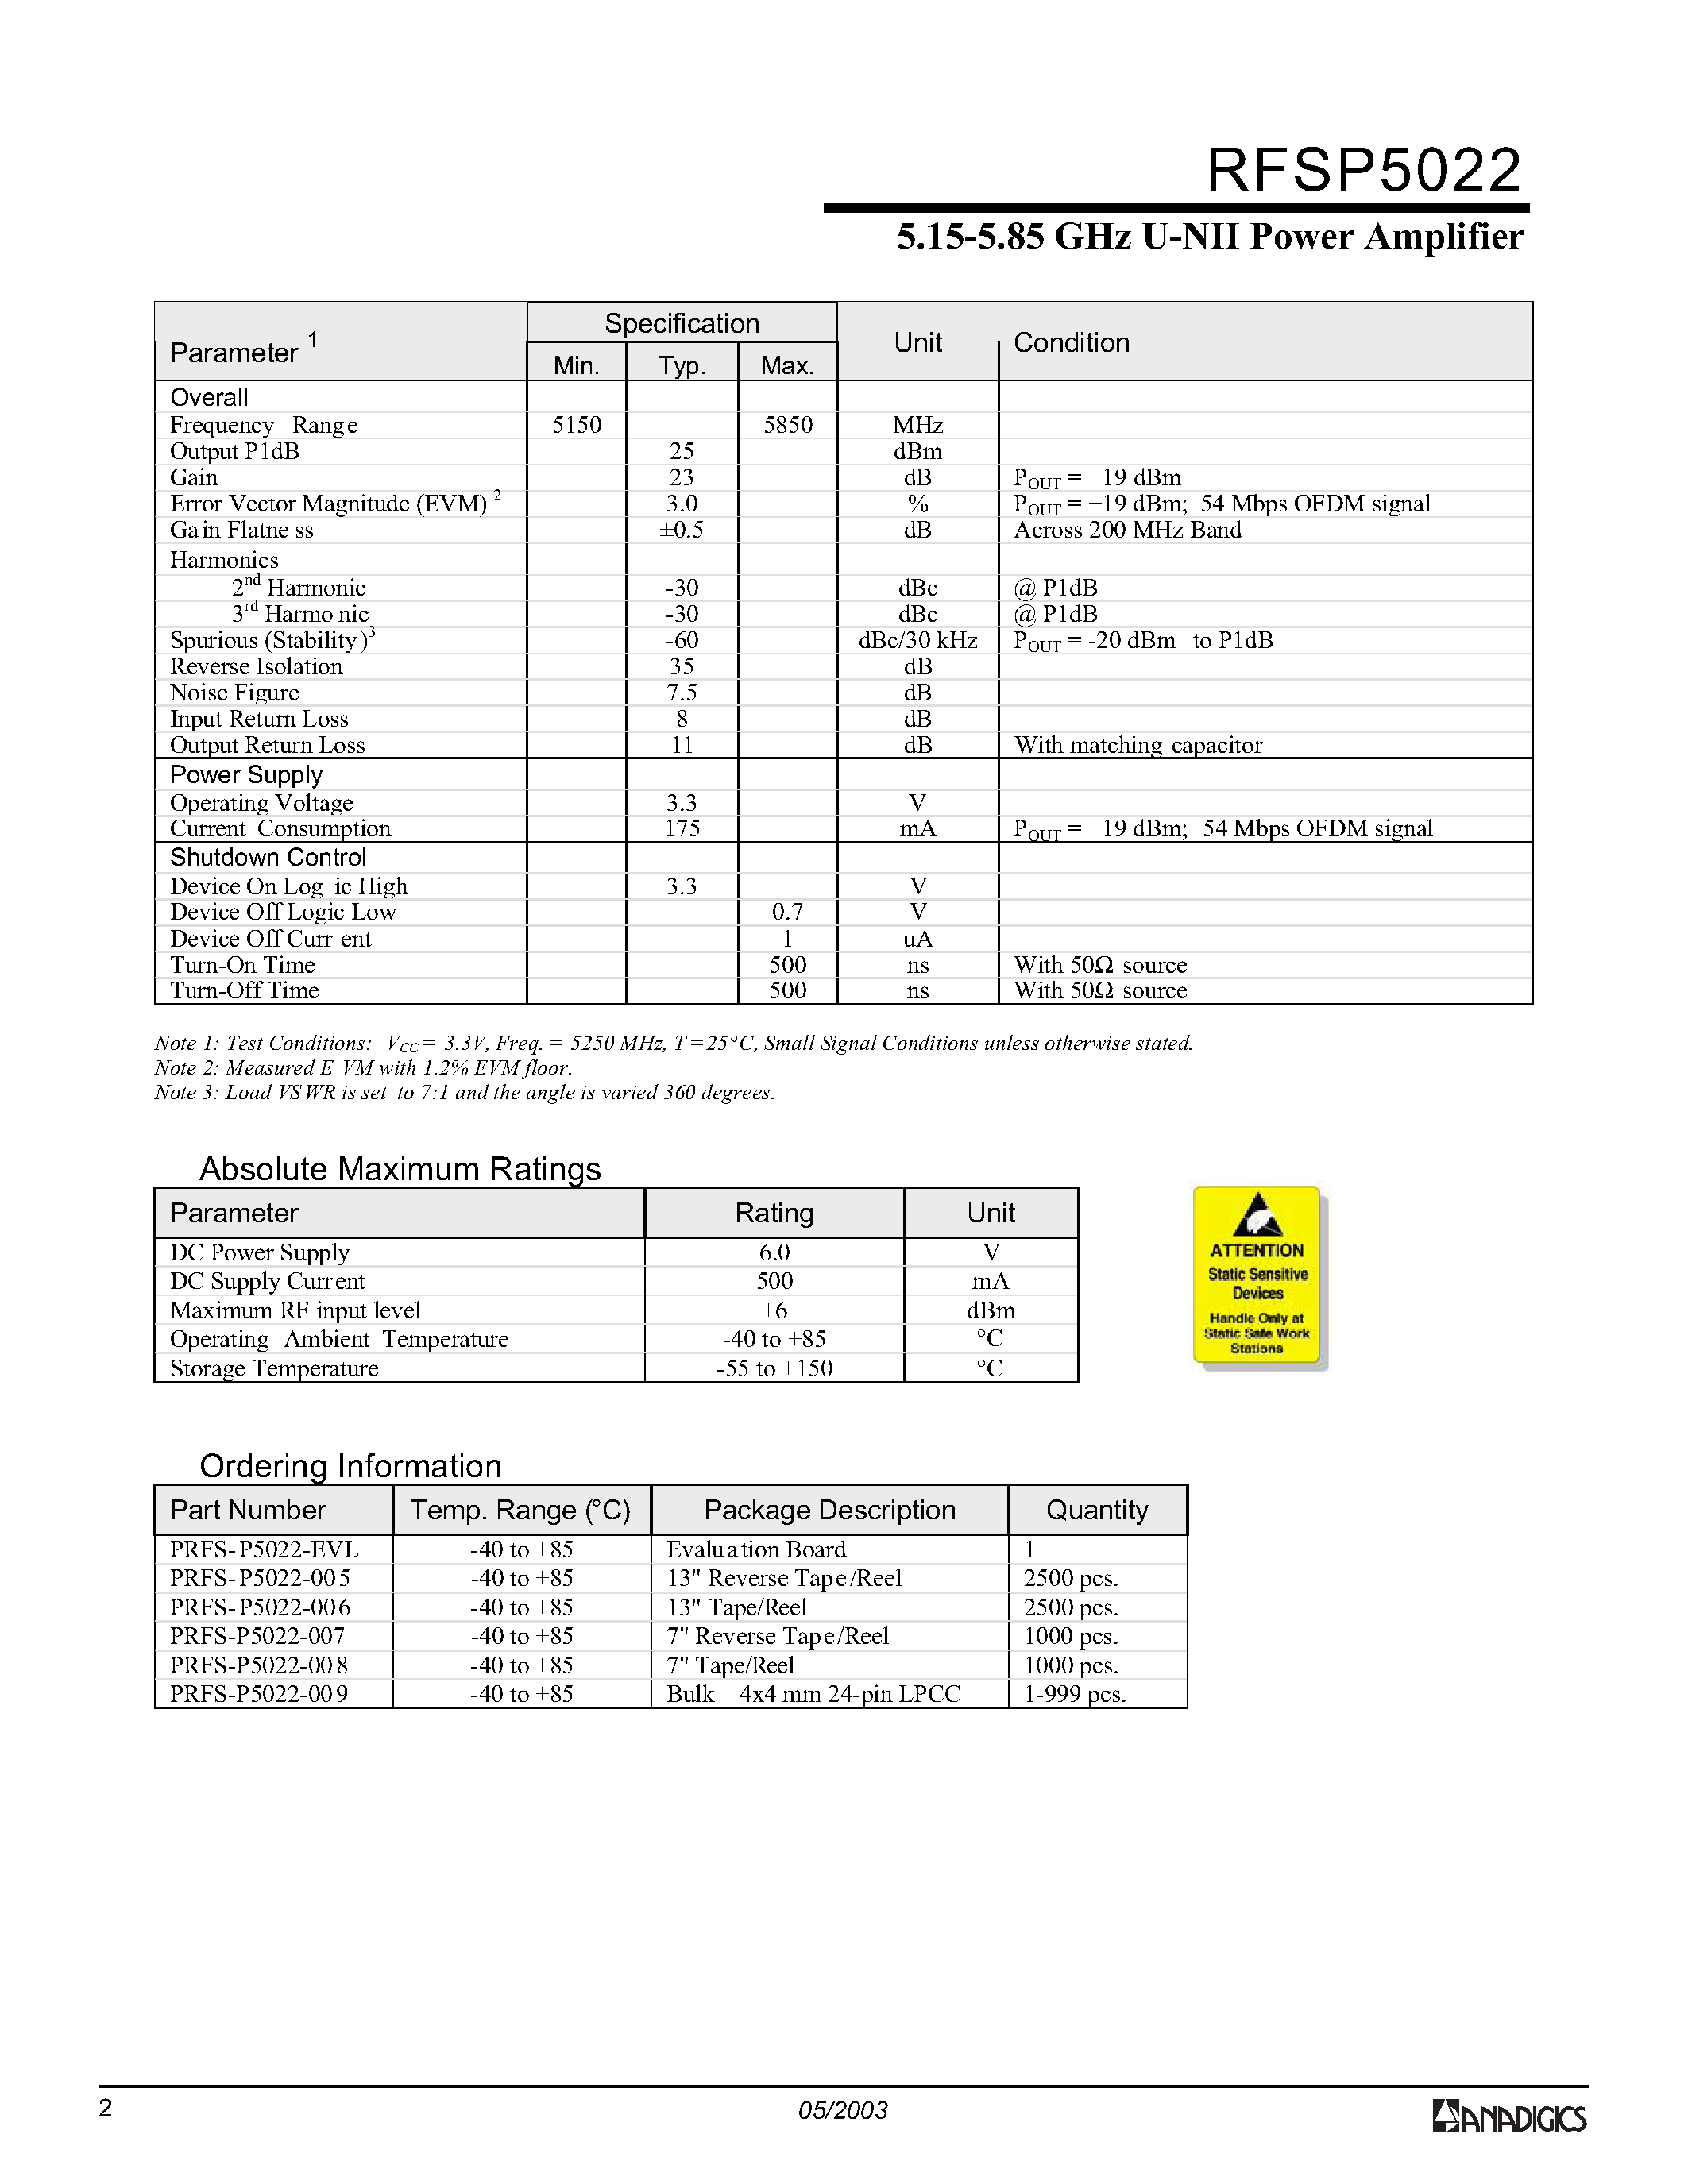 Datasheet PRFS-P5022-008 - 5.15-5.85 GHz U-NII Power Amplifier page 2